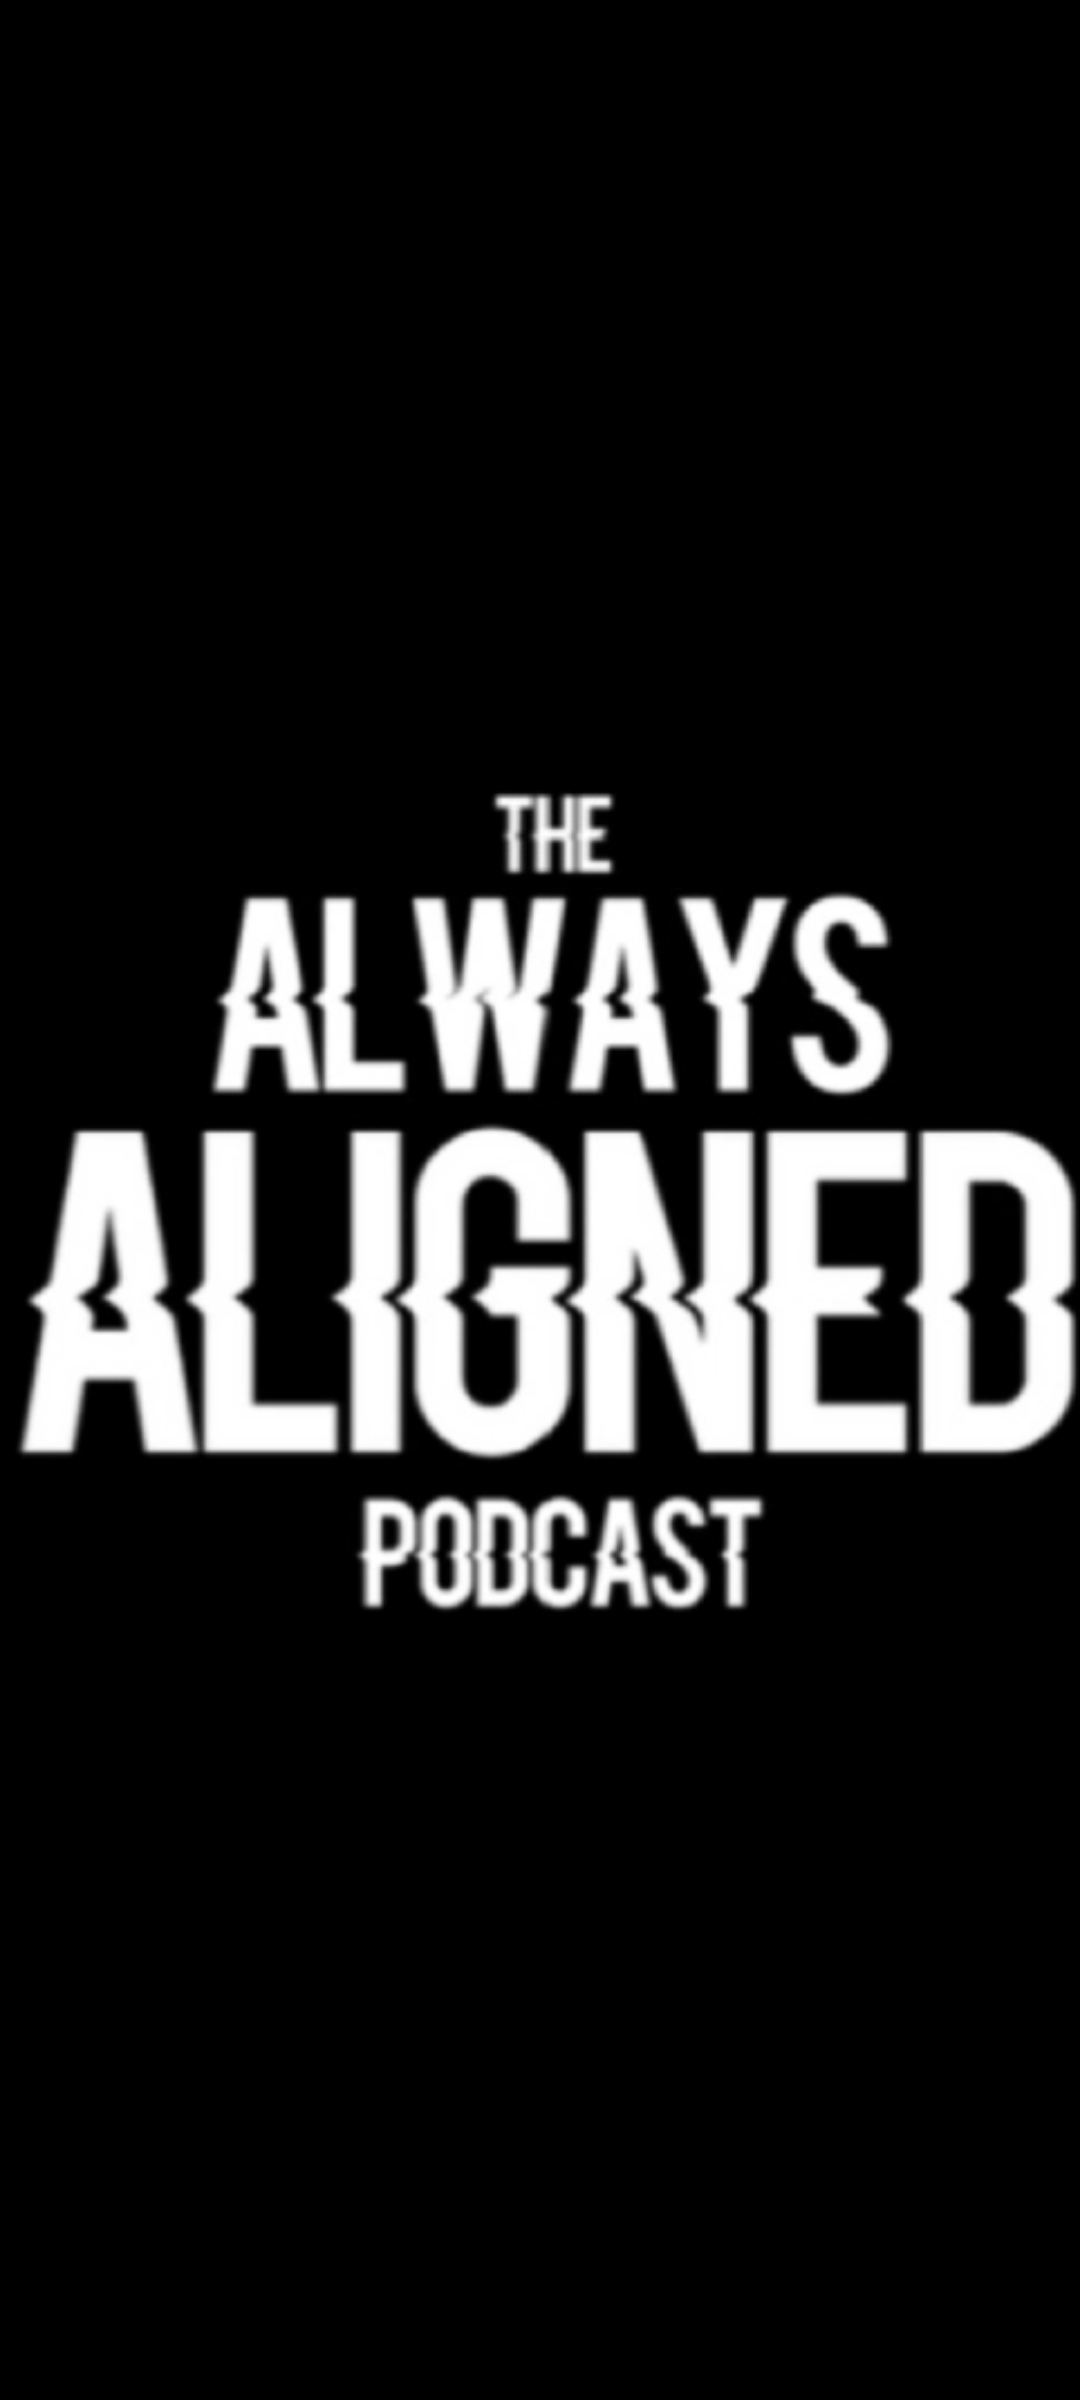 Always Aligned Podcast